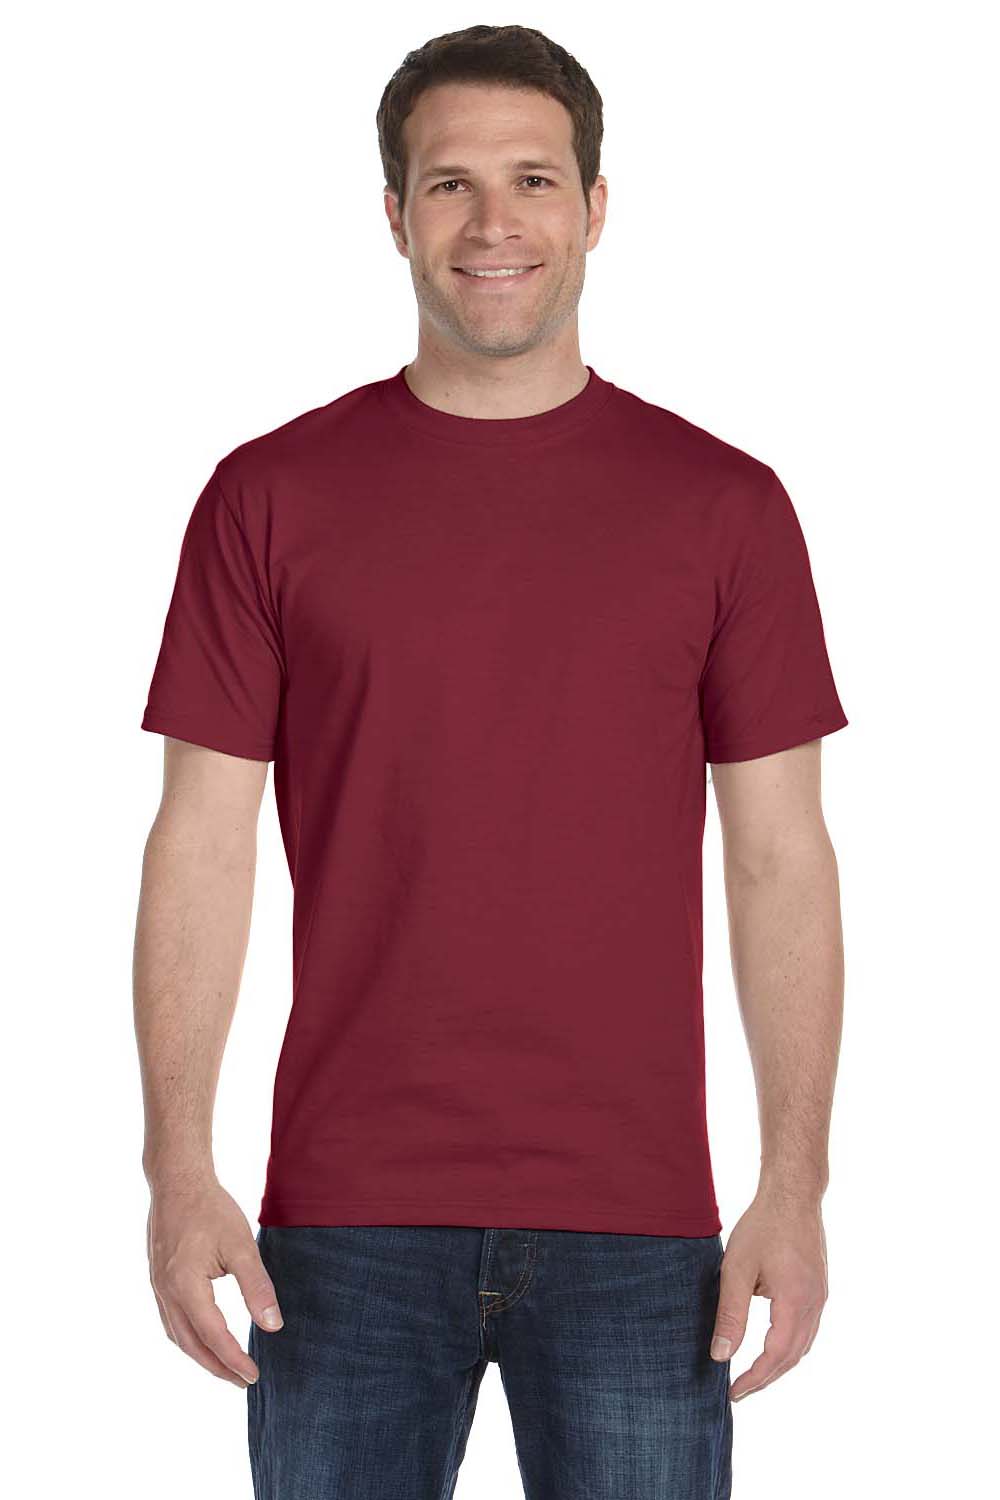 Hanes 5180 Mens Beefy-T Short Sleeve Crewneck T-Shirt Cardinal Red Front